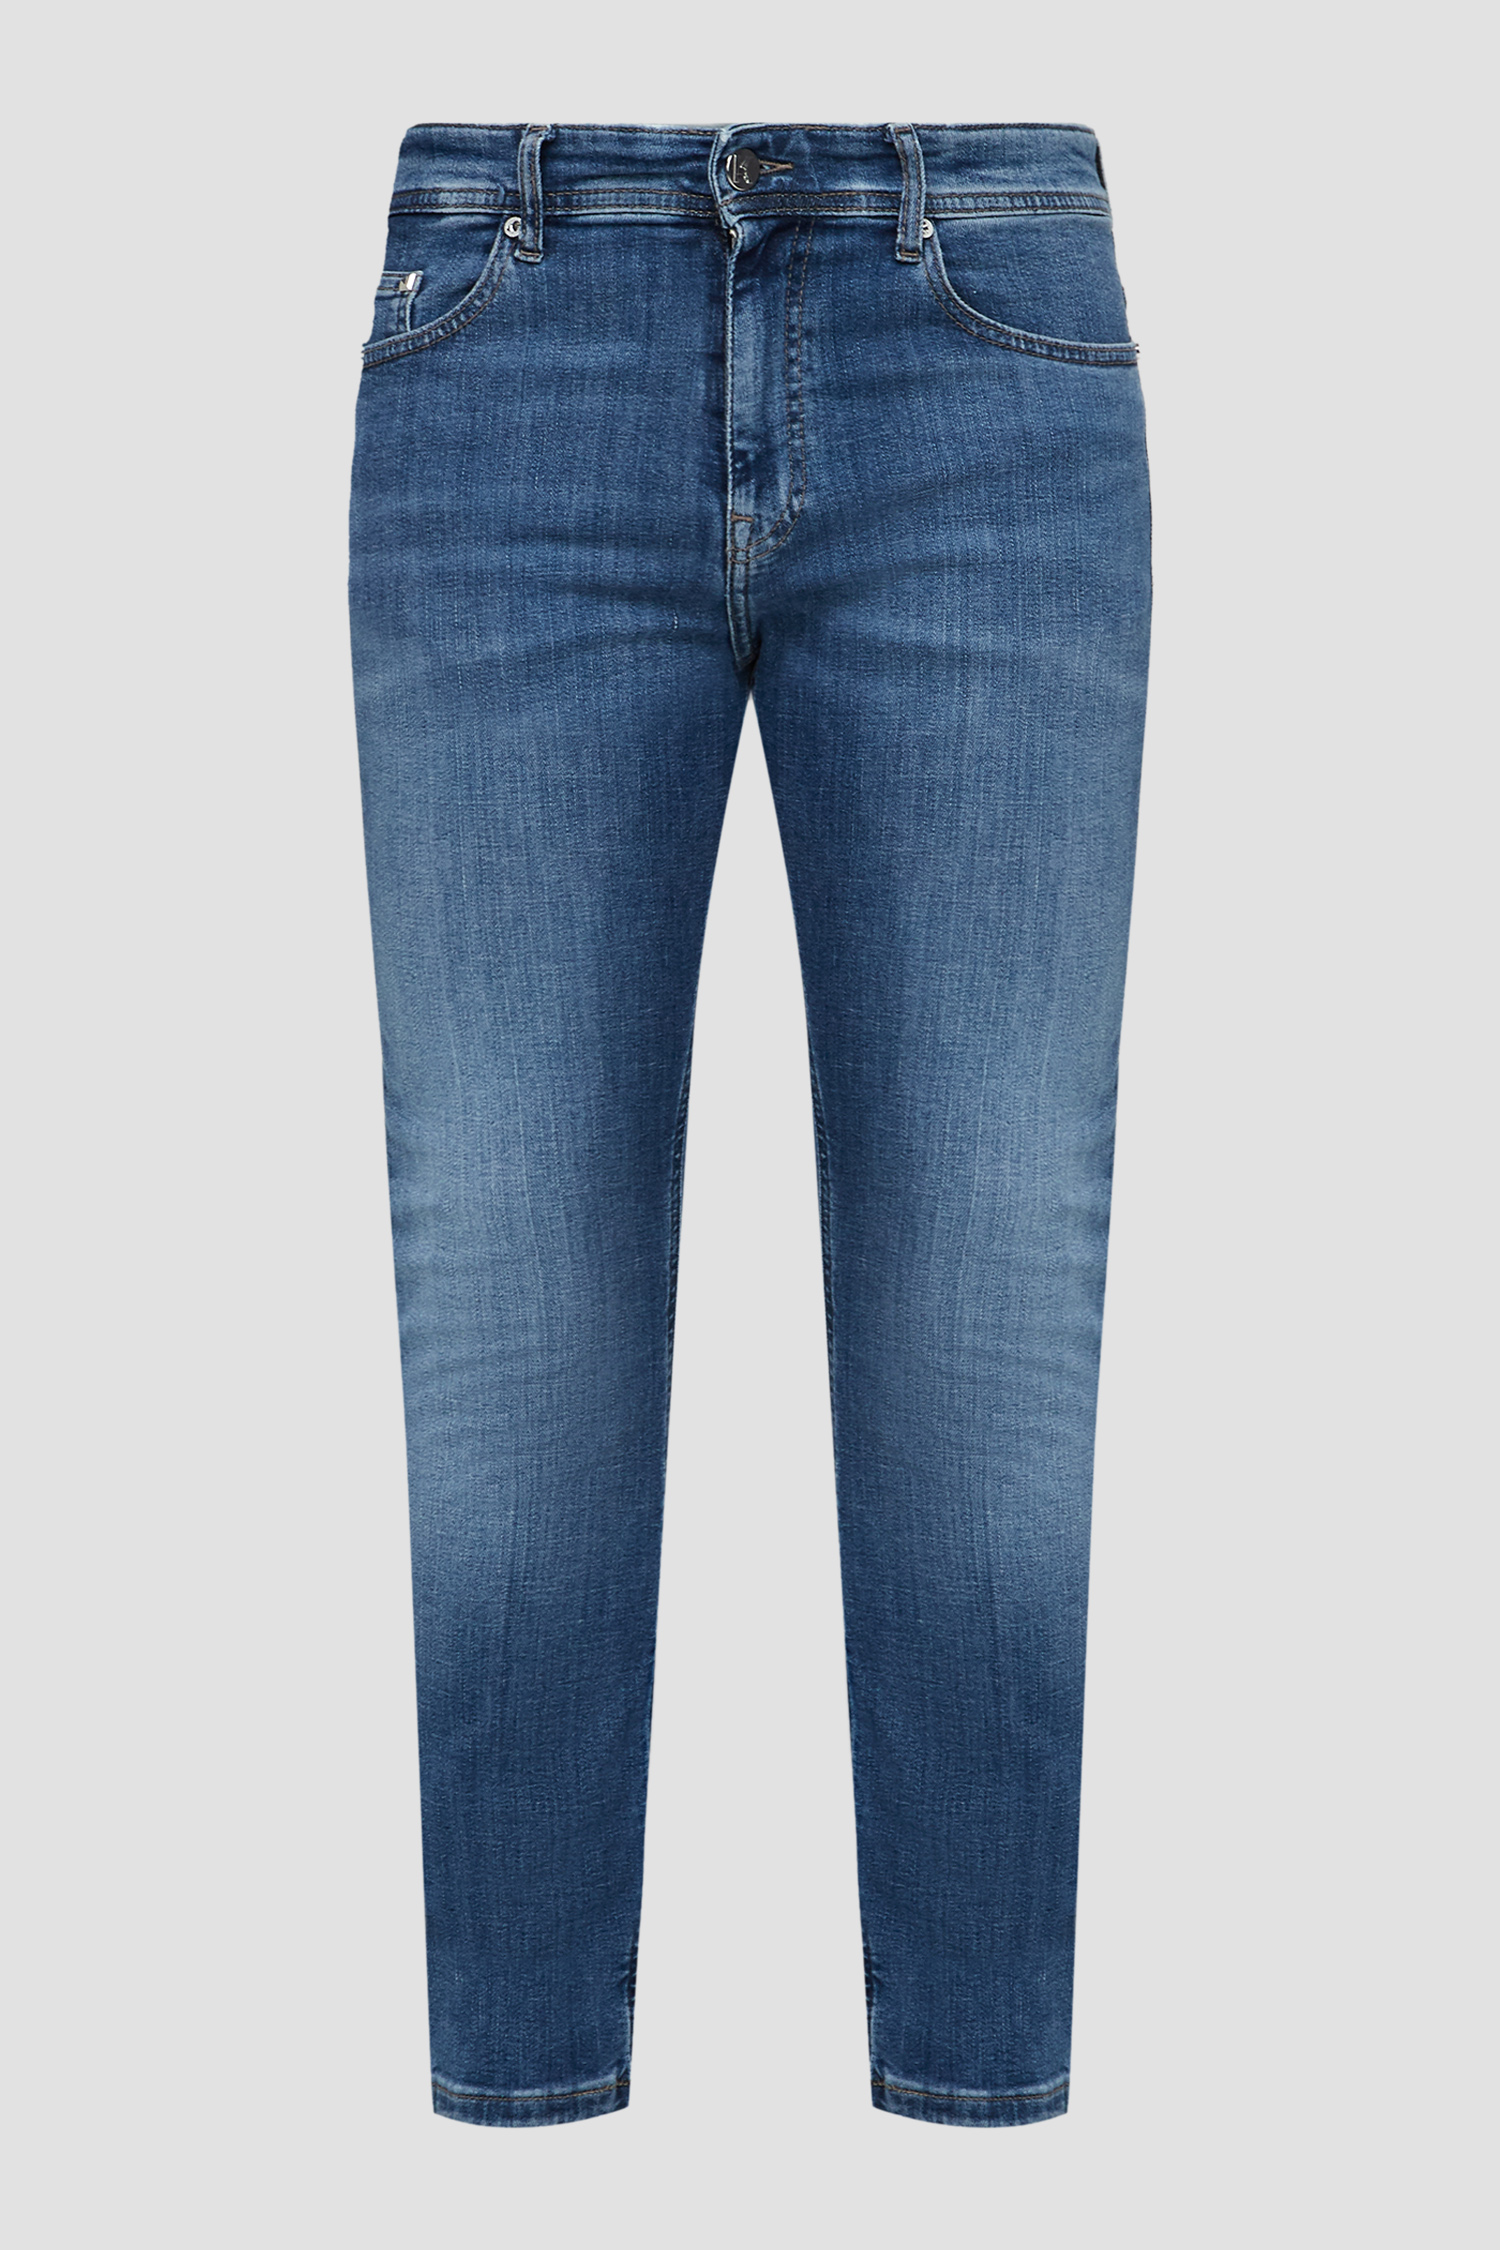 Мужские синие джинсы Karl Lagerfeld 500830.265840;660